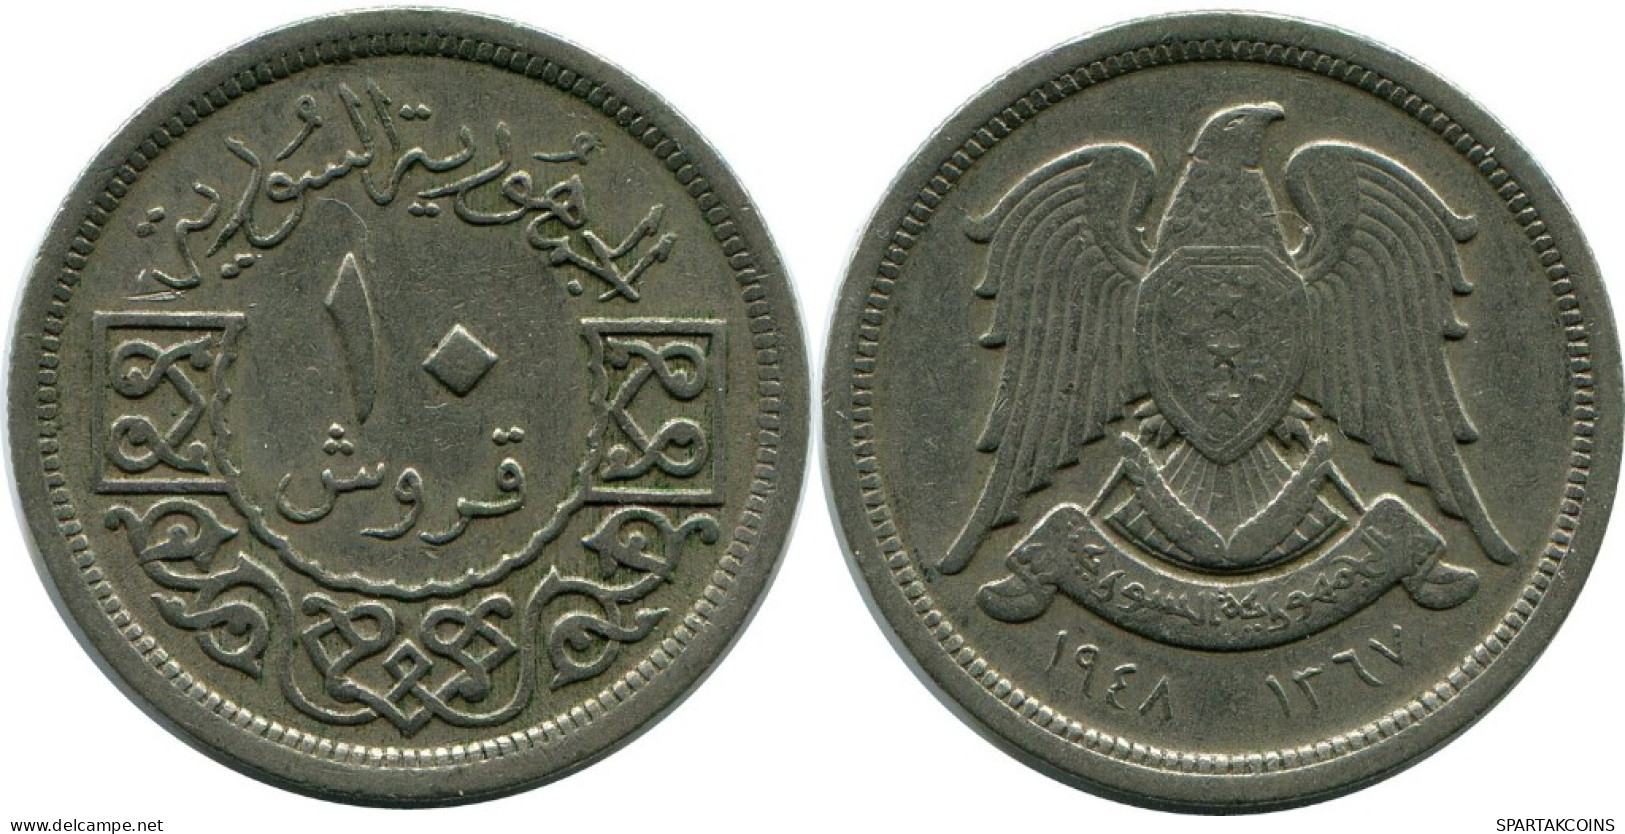 10 QIRSH 1948 SIRIA SYRIA Islámico Moneda #AK200.E.A - Syria